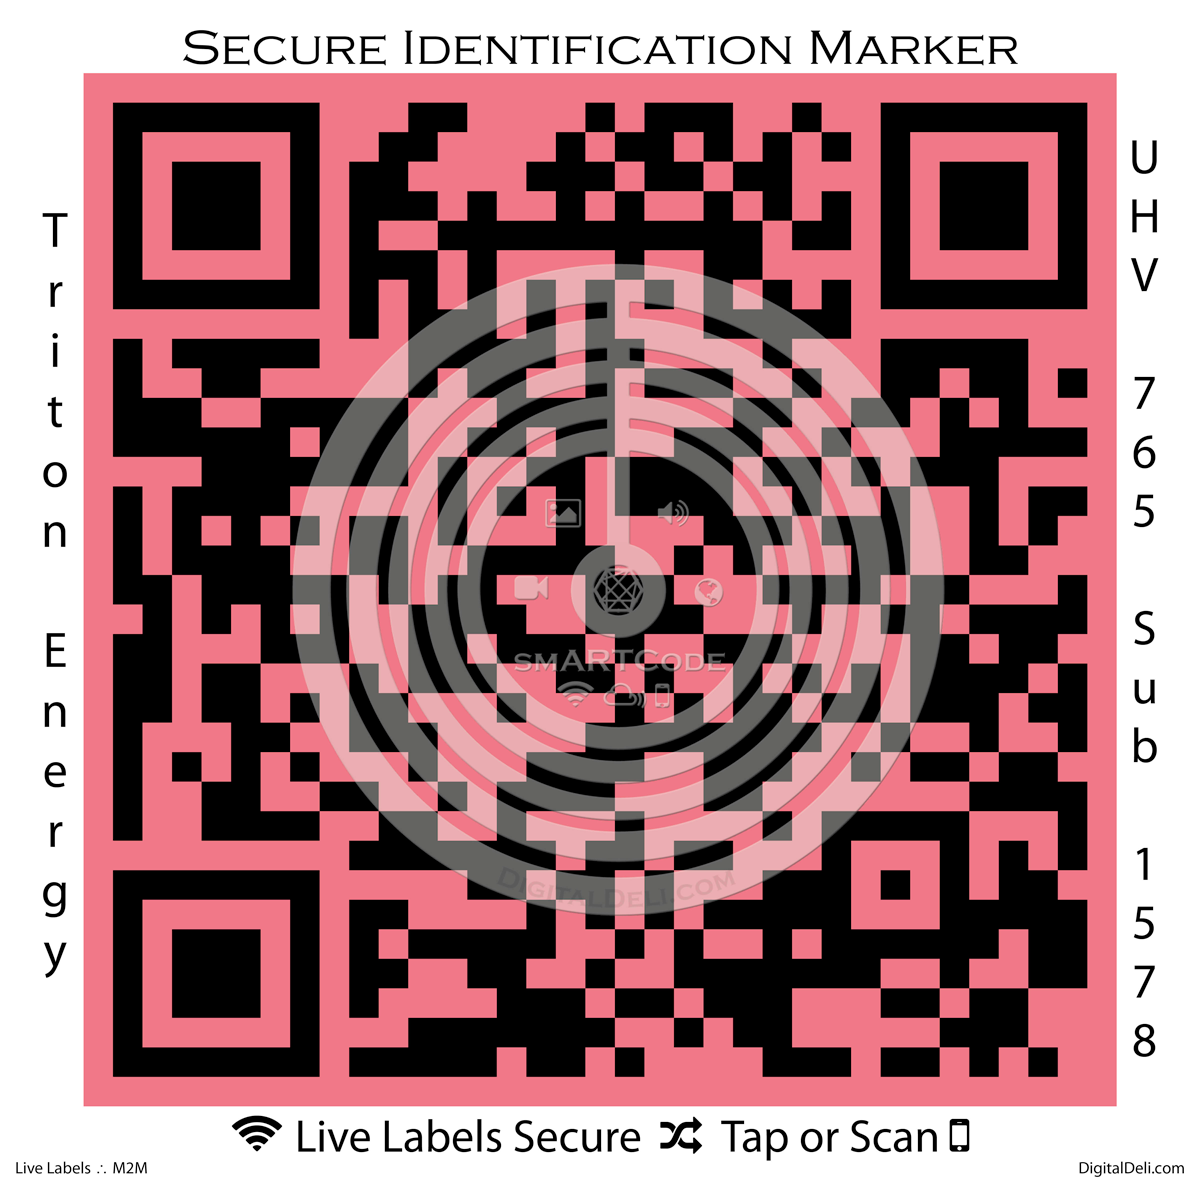 Live Labels M2M, Secure Identification Marker